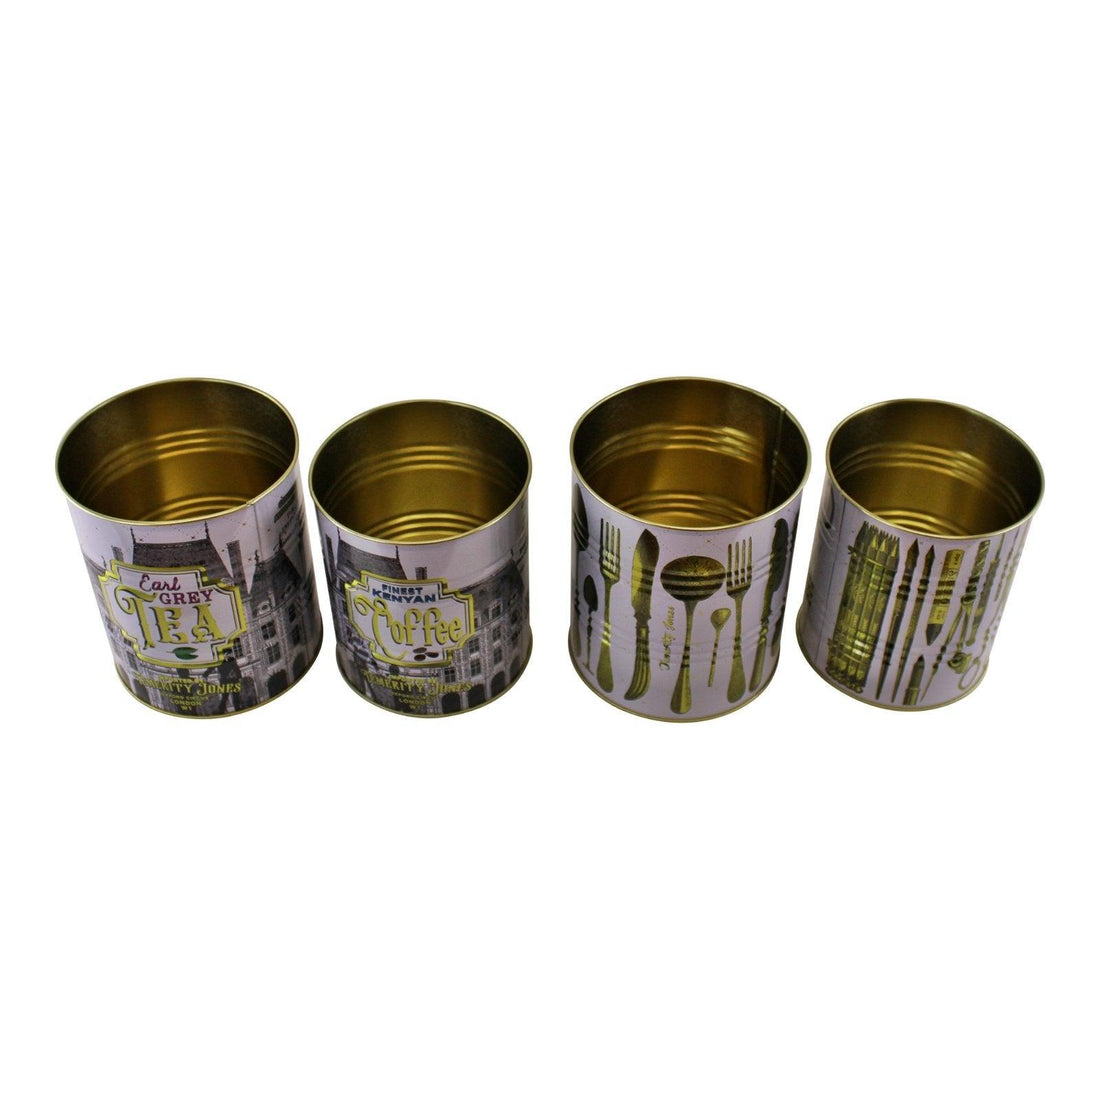 Set of 4 Vintage Style Storage Tins - £20.99 - Kitchen Storage 